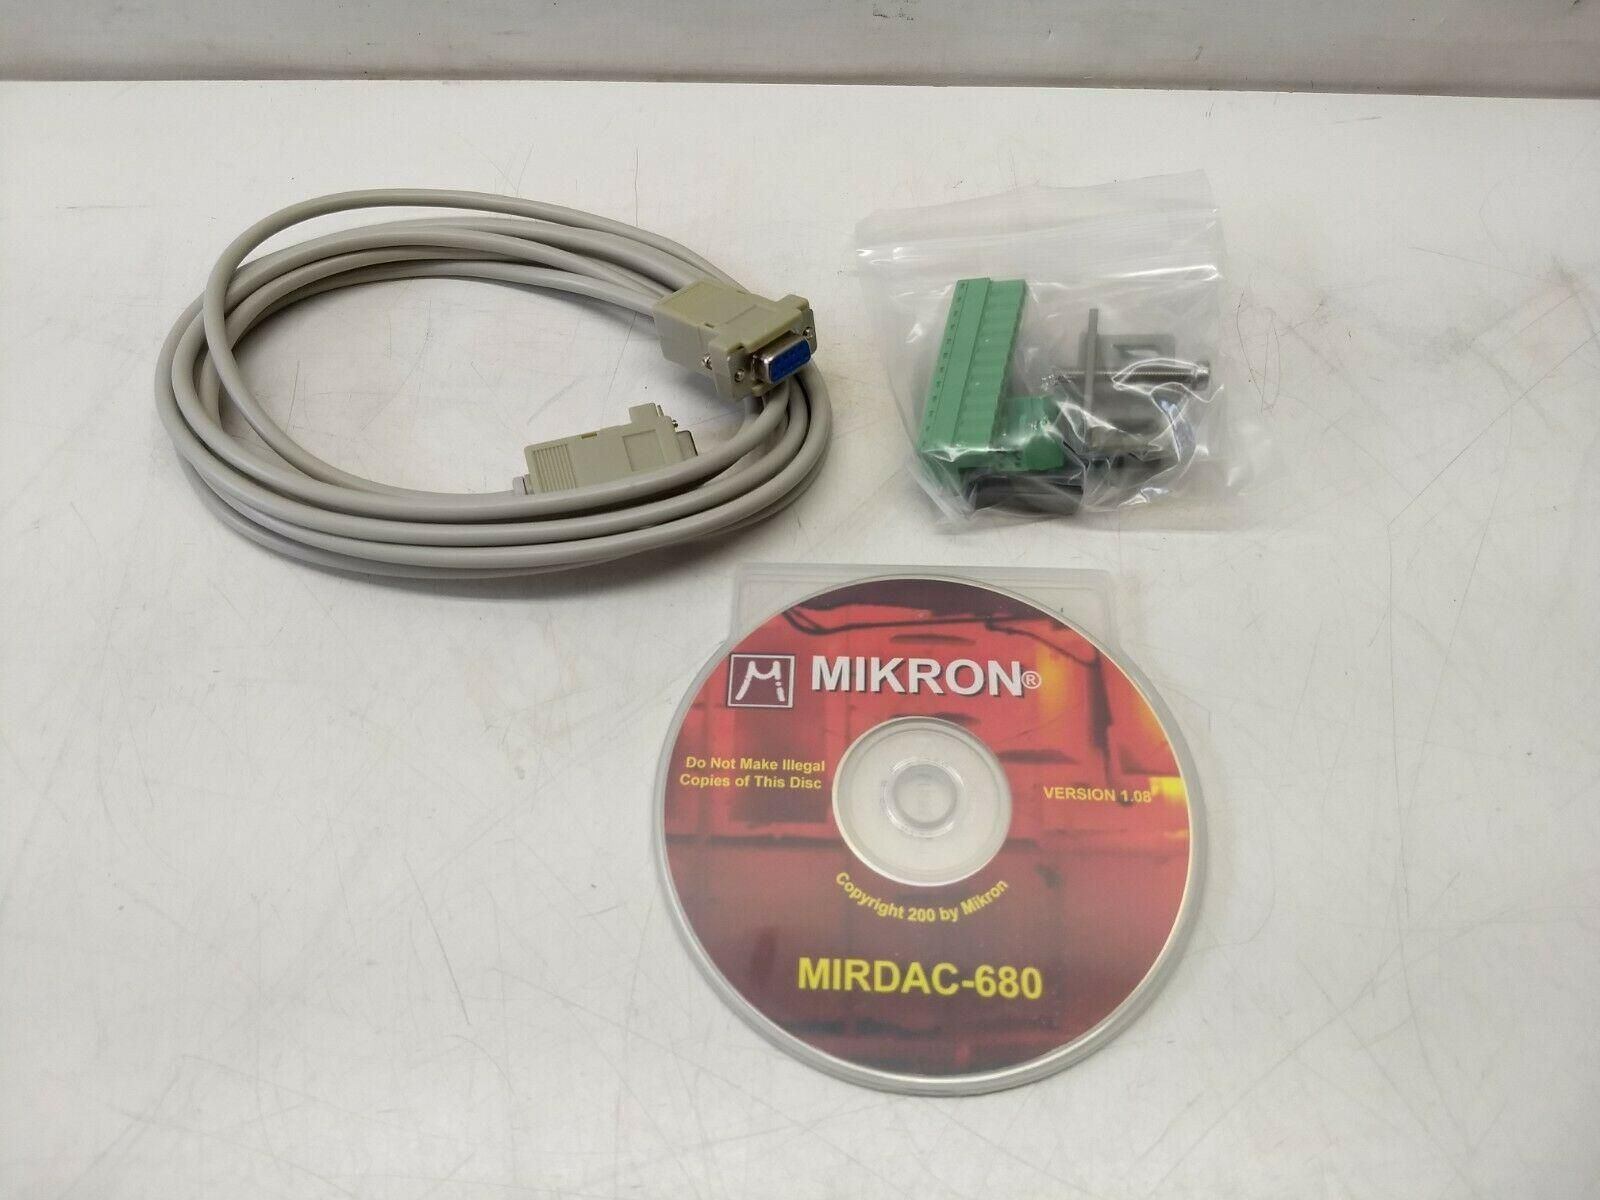 Mikron MIRDAC-680 Software Version 1.08 w/ Cable, Connectors